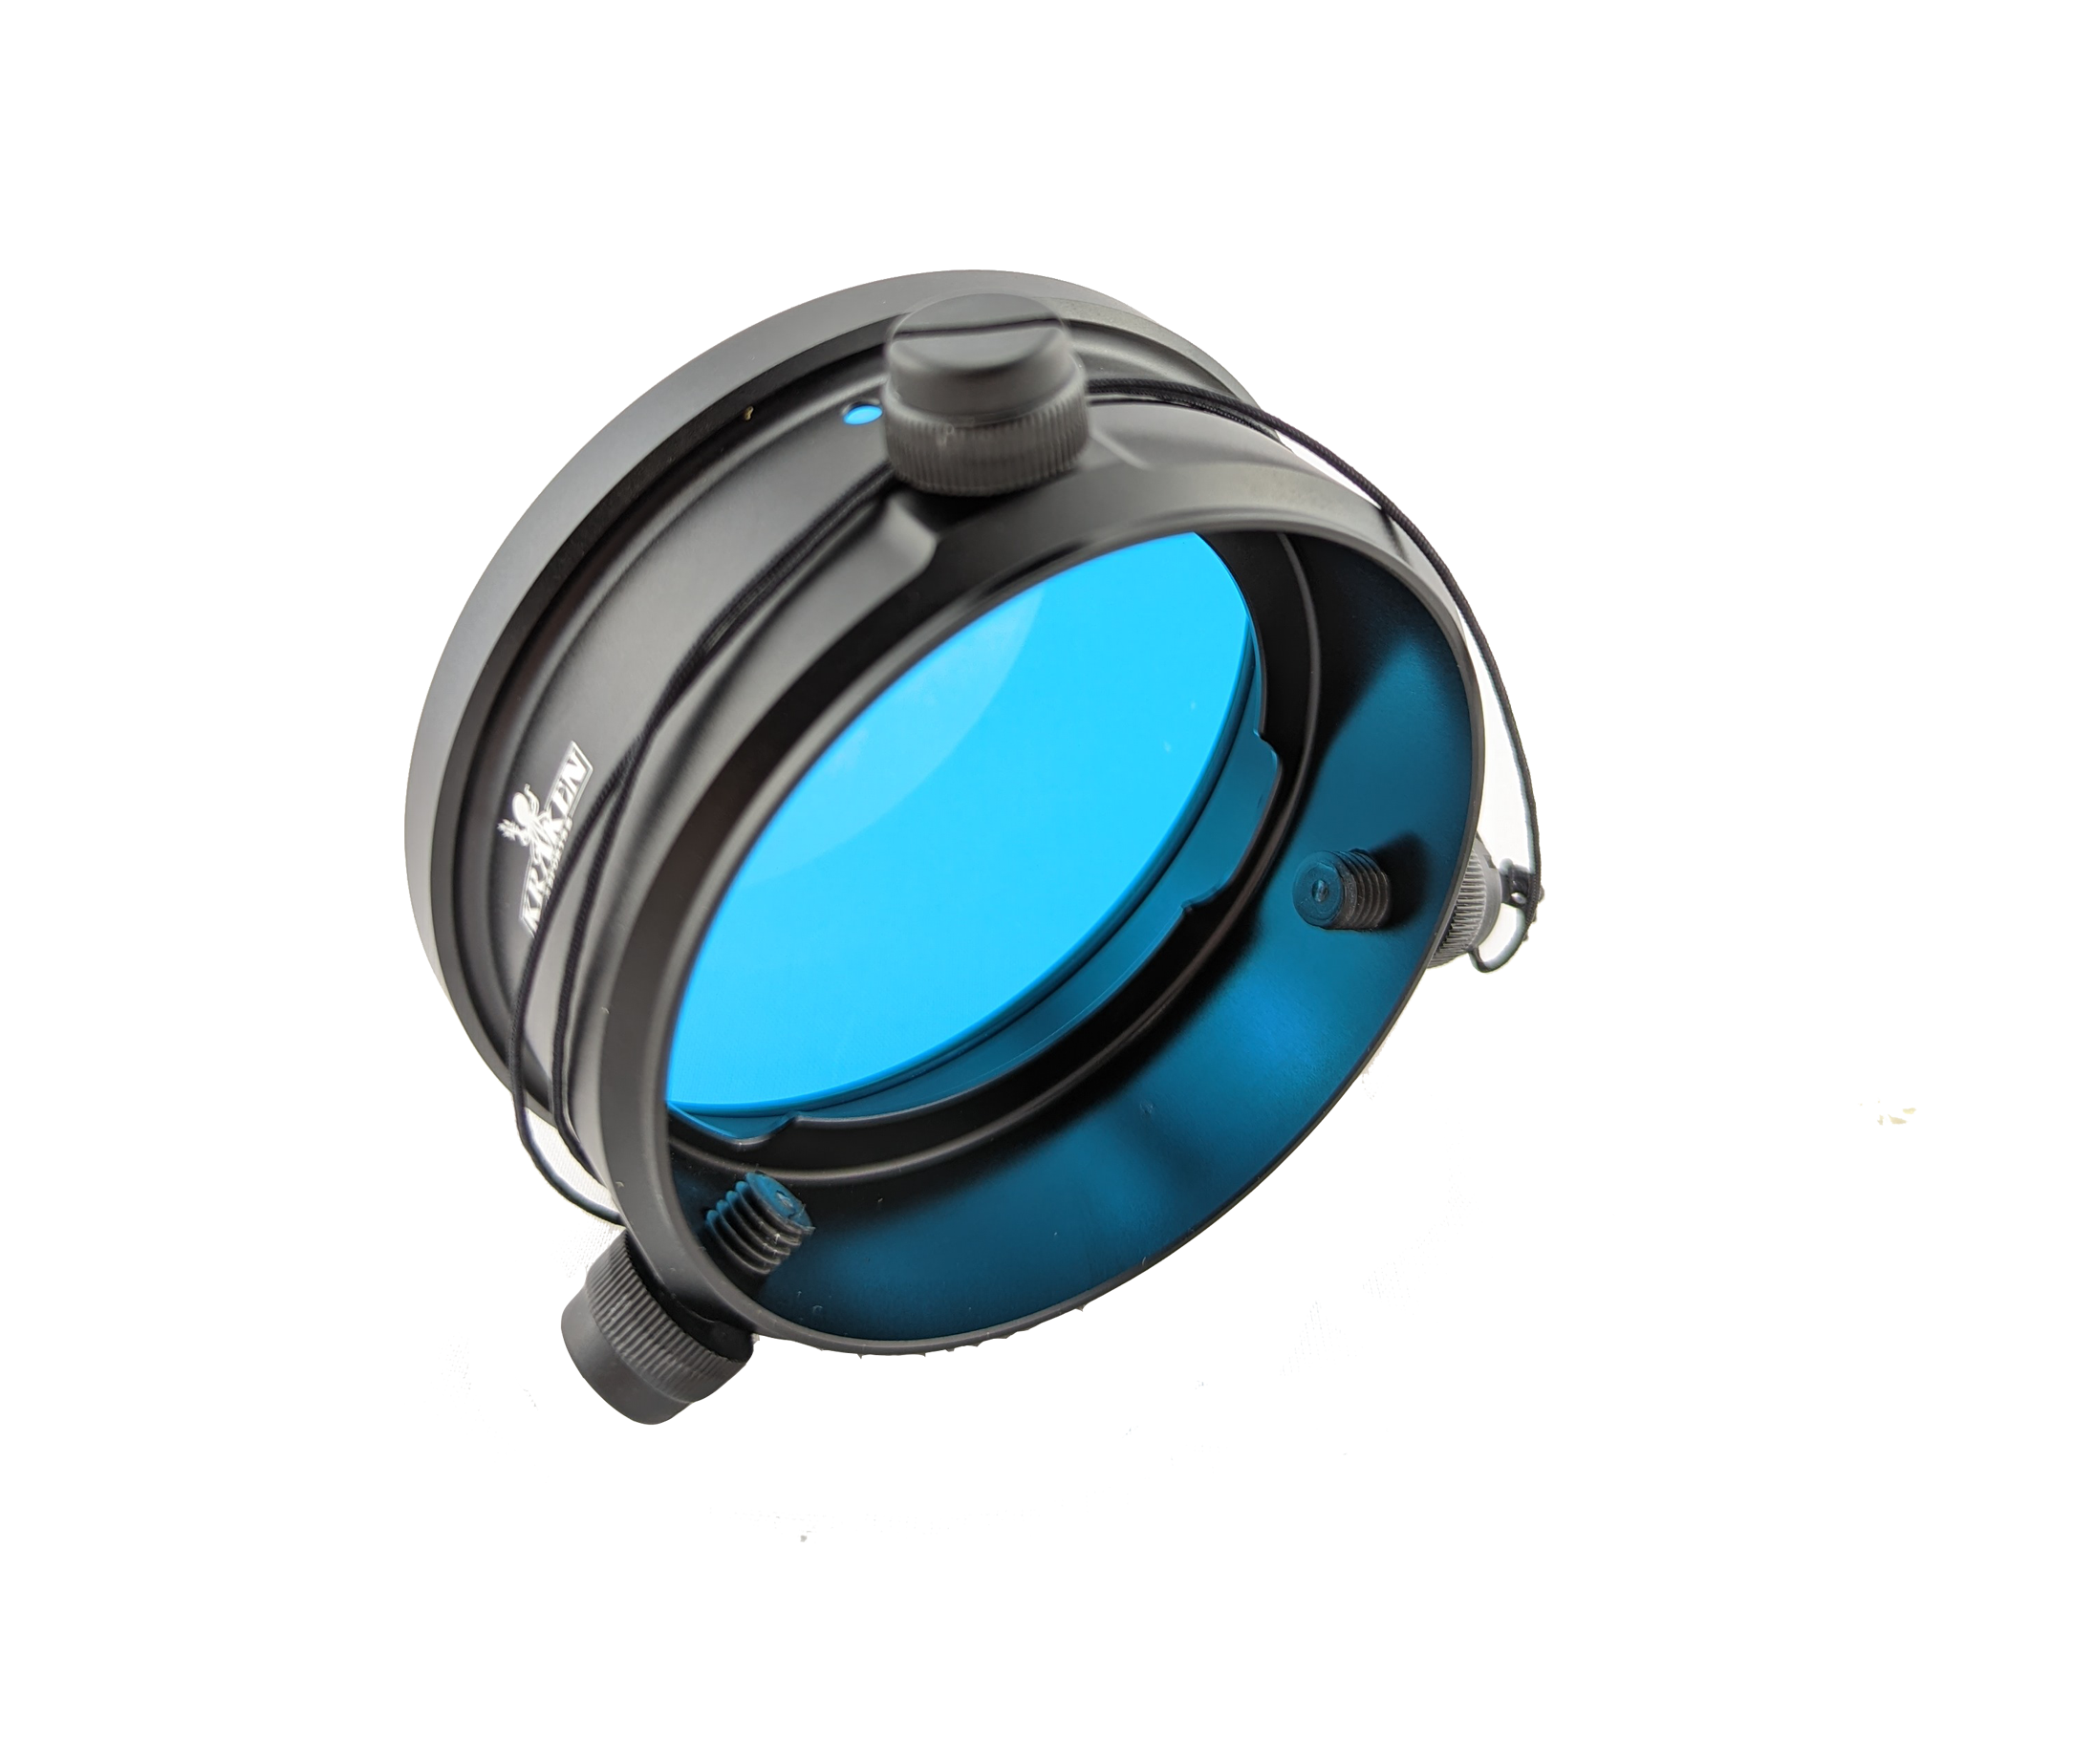 Kraken Blue Ambient Filter for Hydra 15000 & Solar Flare Mini 15000